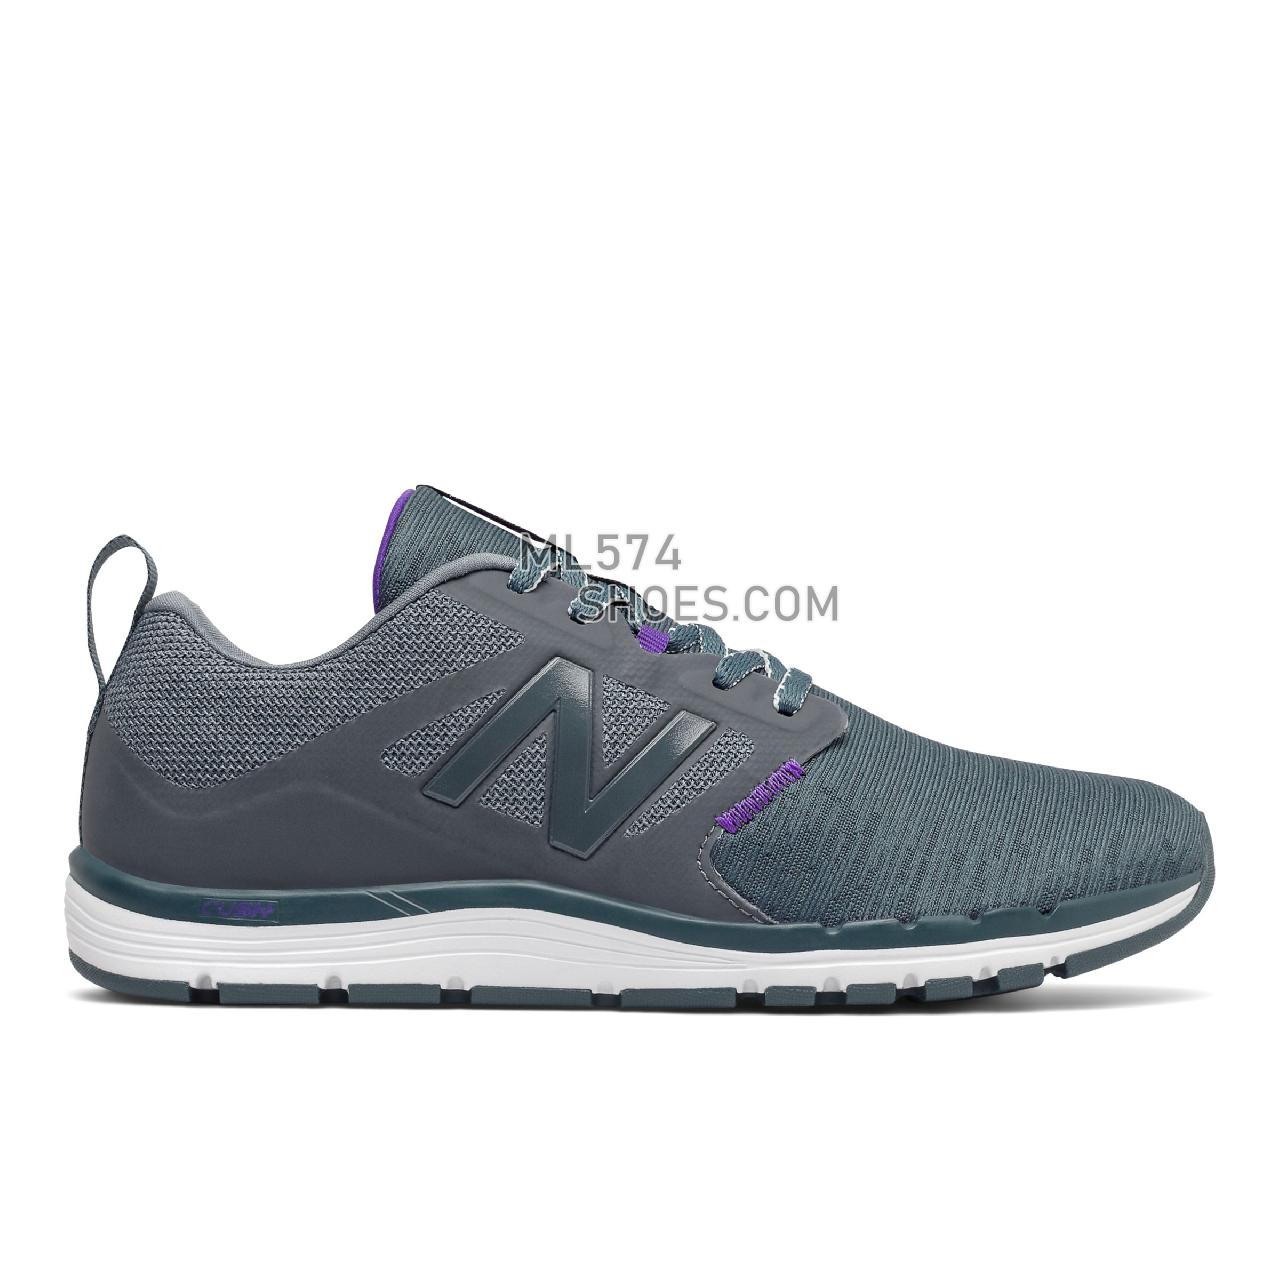 New Balance 577V5 - Women's Training - Grey with Purple - WX577RG5